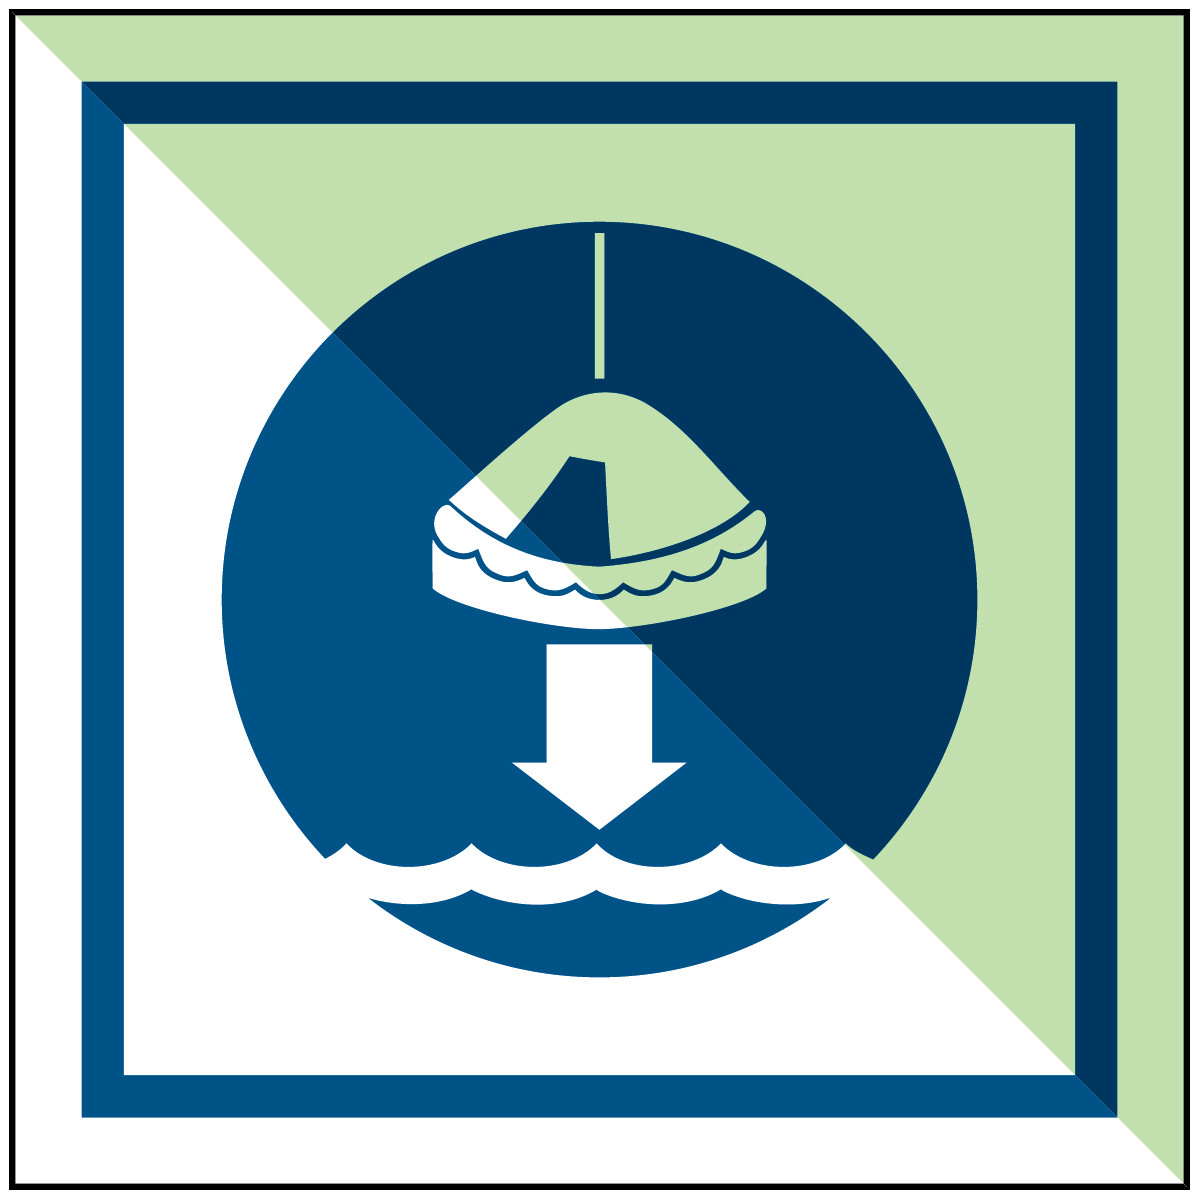 BRADY  Rettungsinsel während der Auslösesequenz zu Wasser lassen – IMO M/IMO205-SA-PHOLUMC-150X150/1